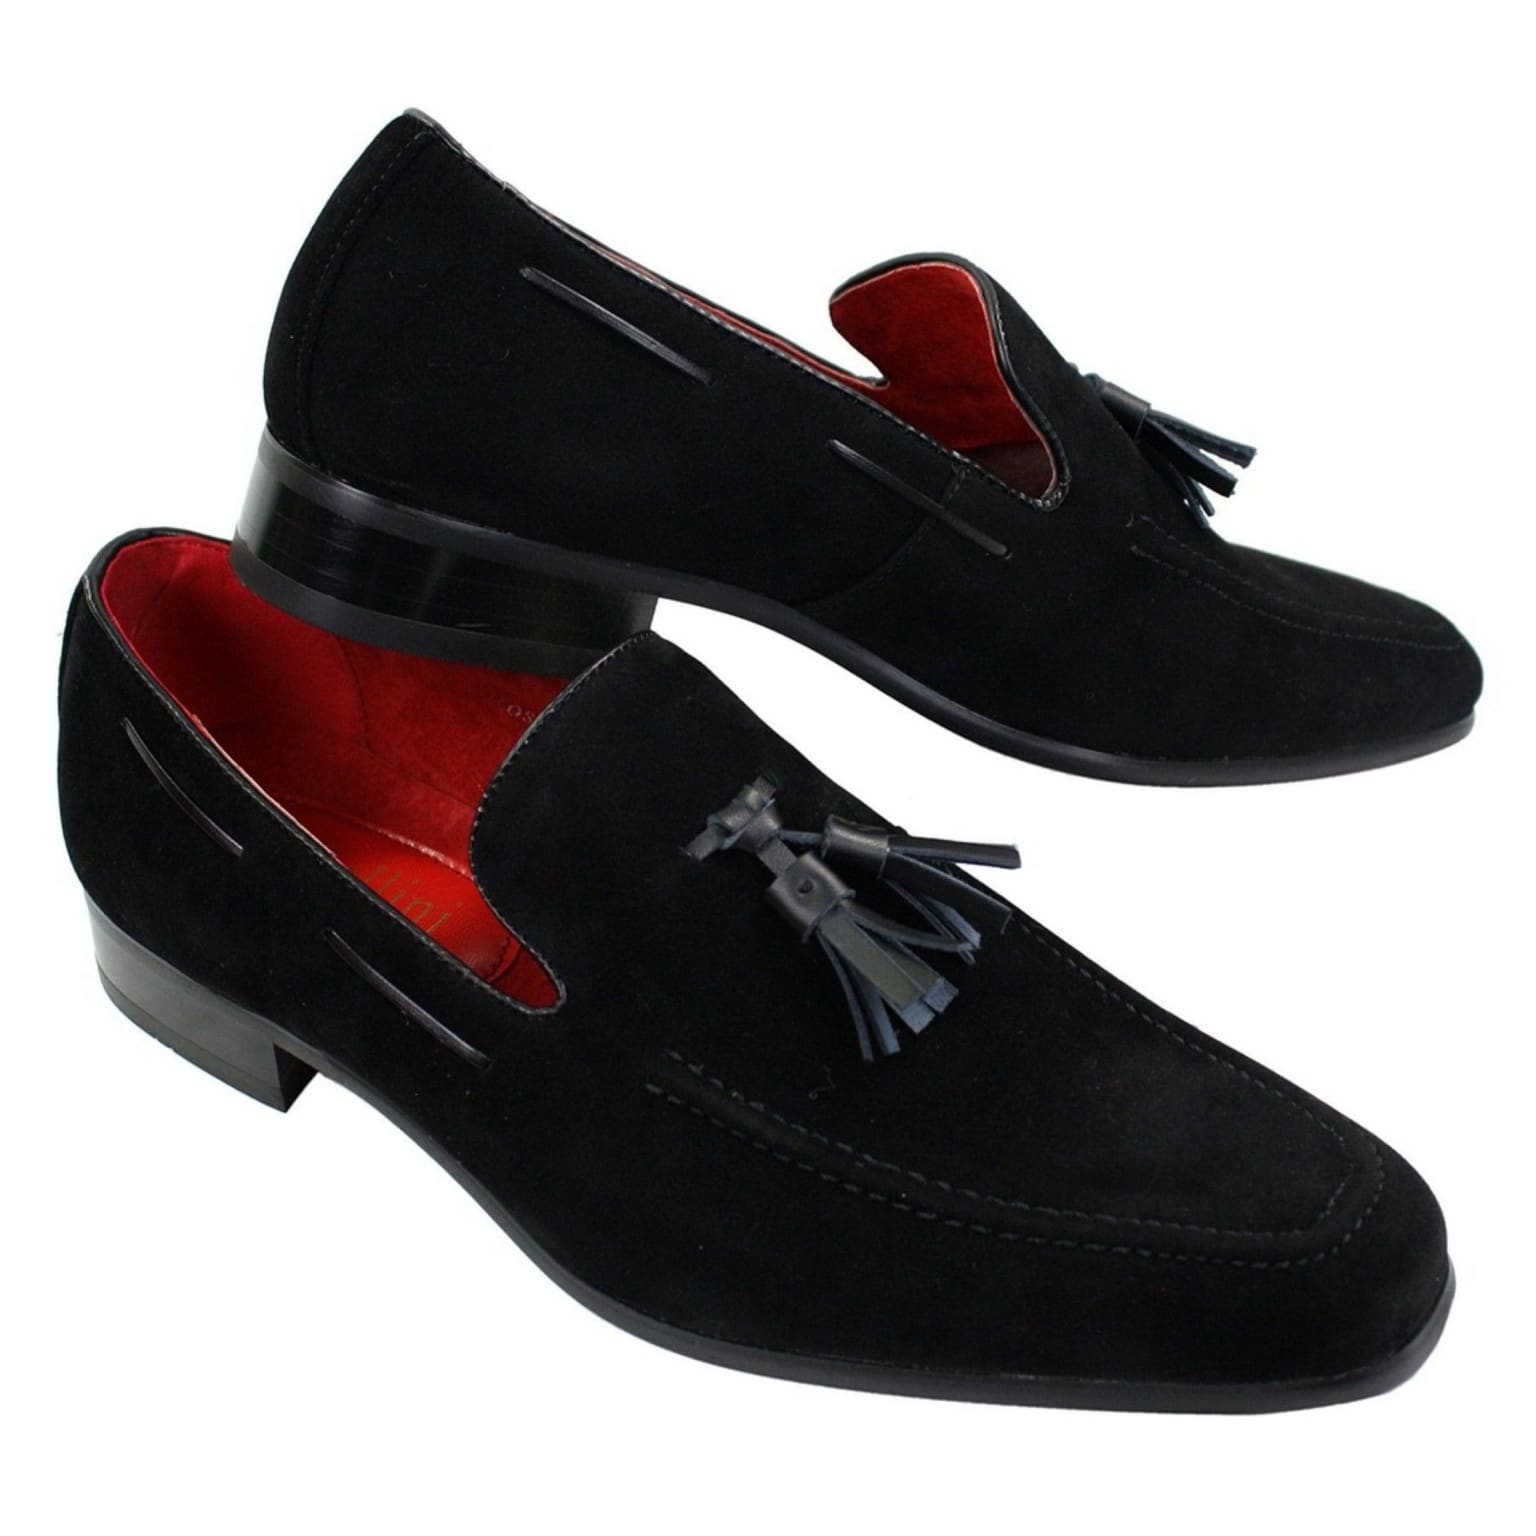 Mens Suede Loafers Driving Shoes Slip On Tassle Design Leather Smart ...